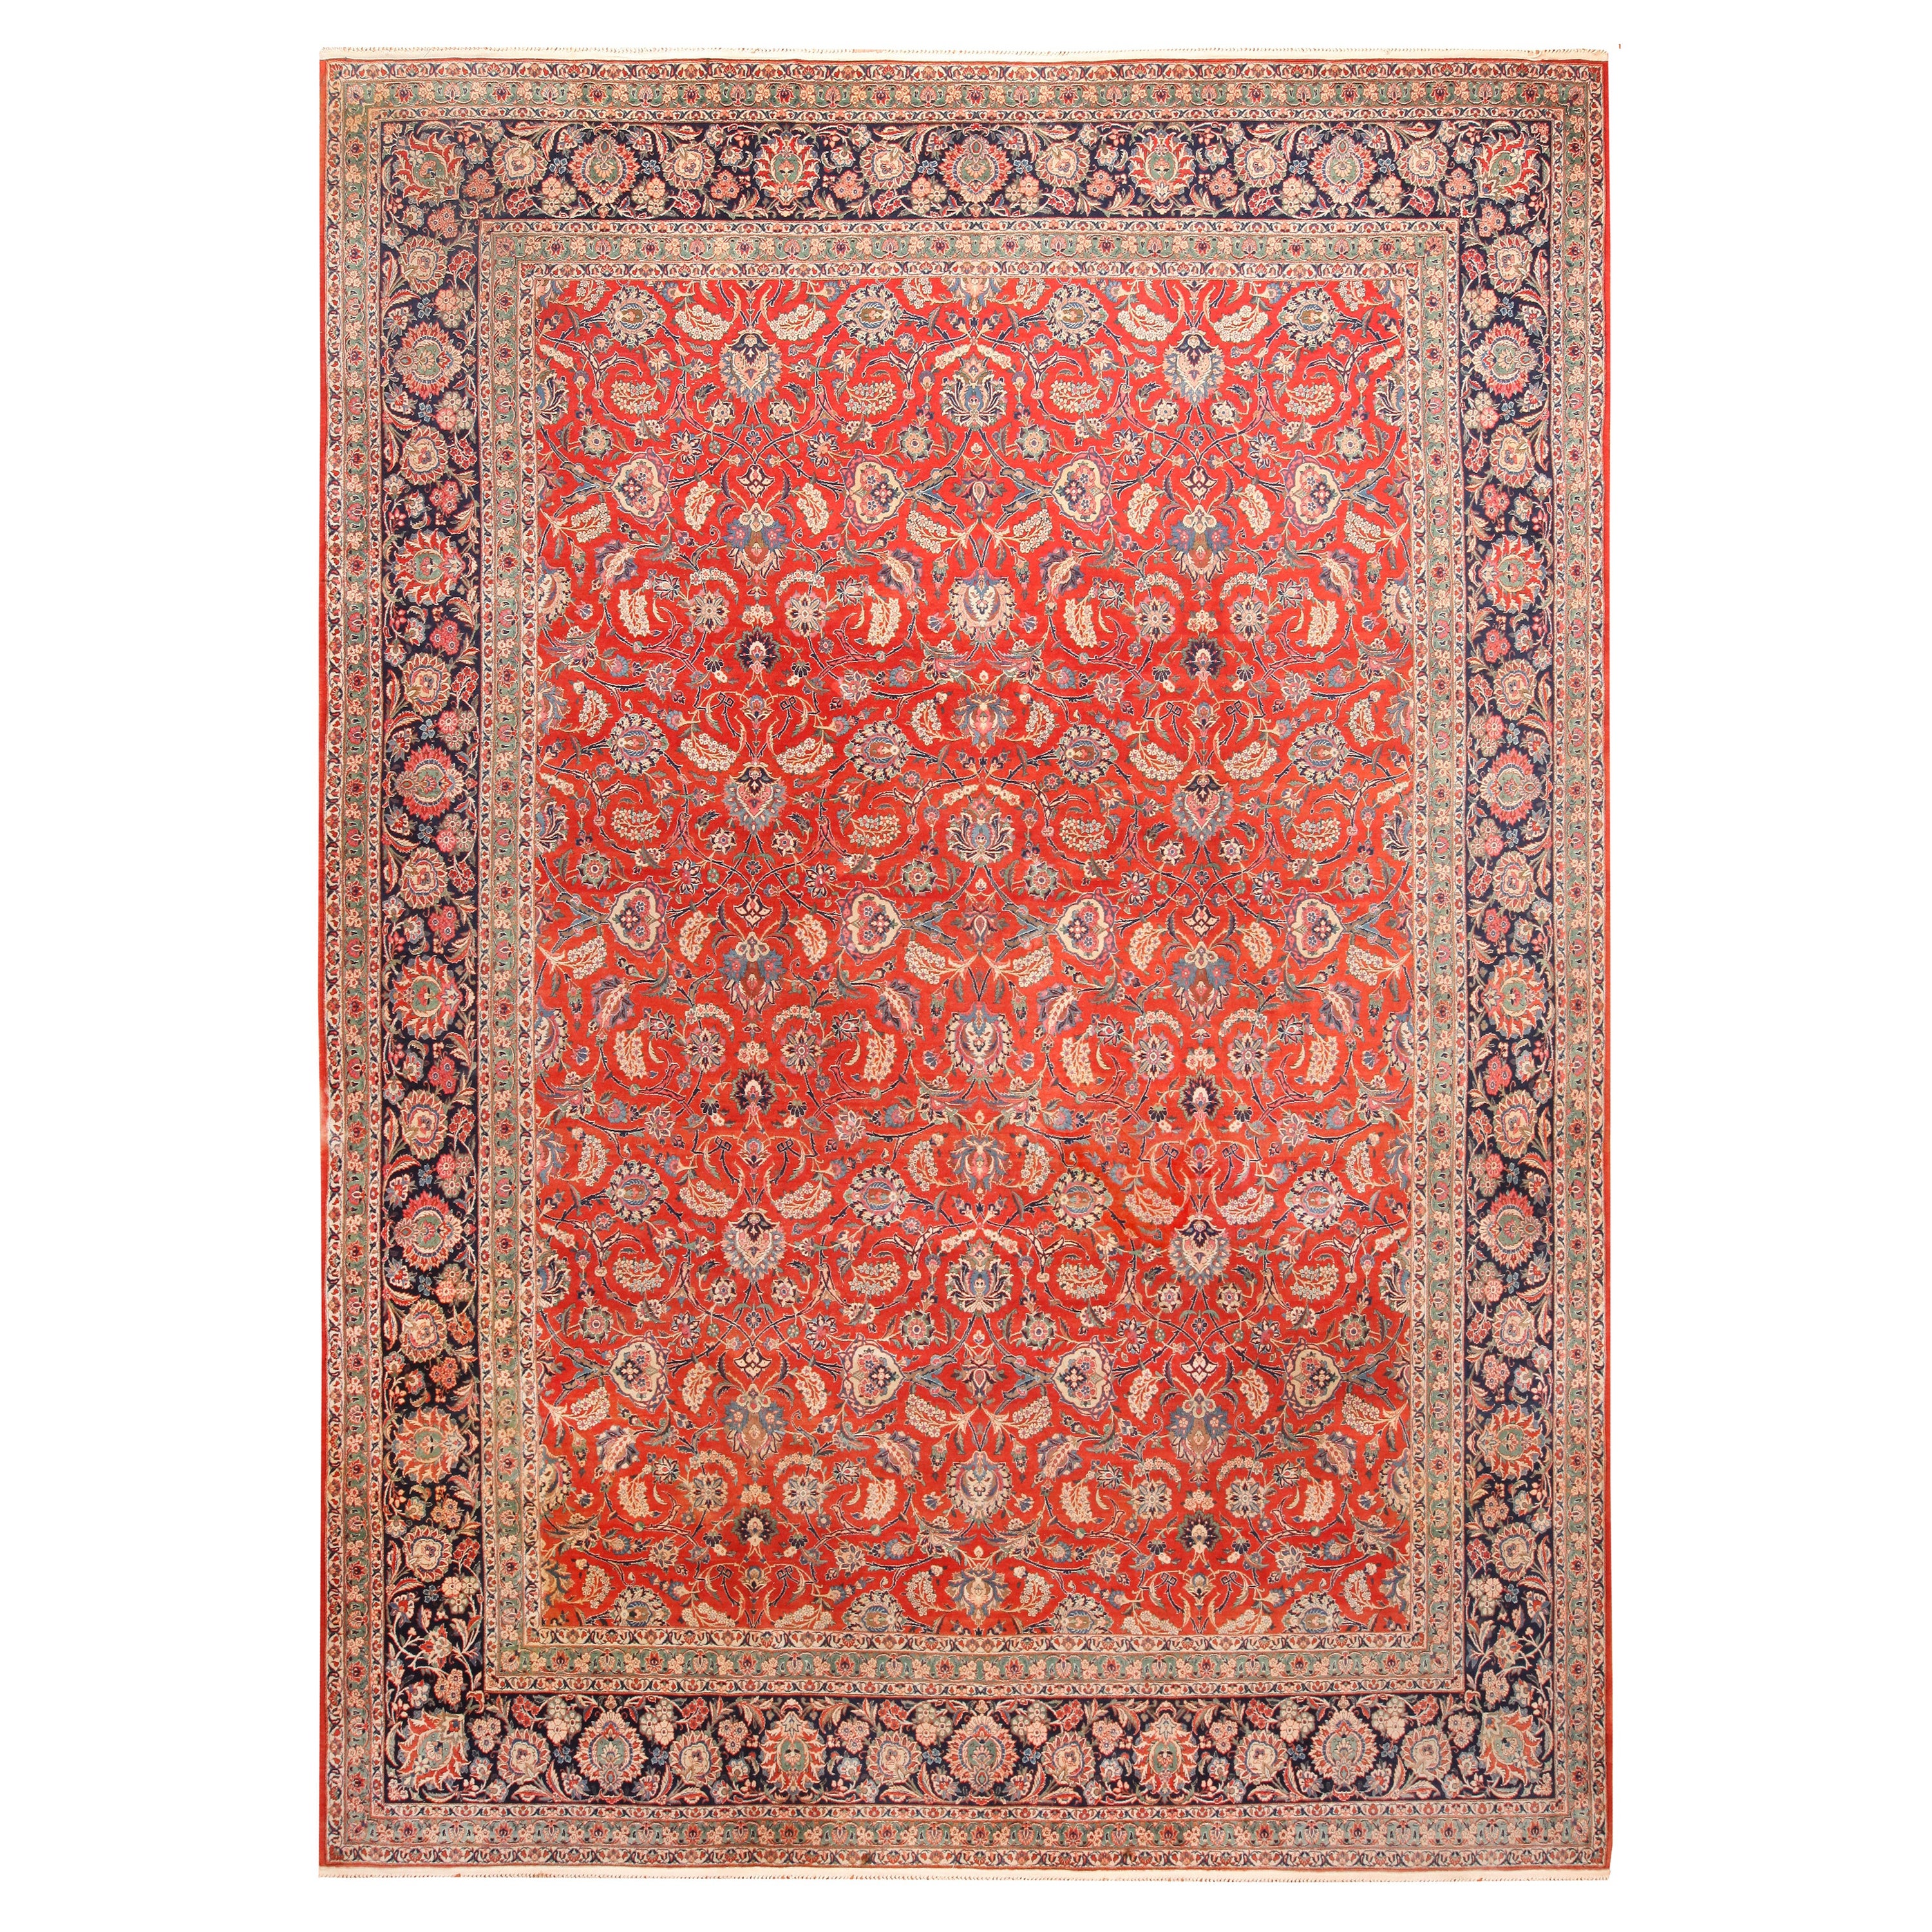 Grand tapis persan Kashan Dabir ancien de 12' x 17'